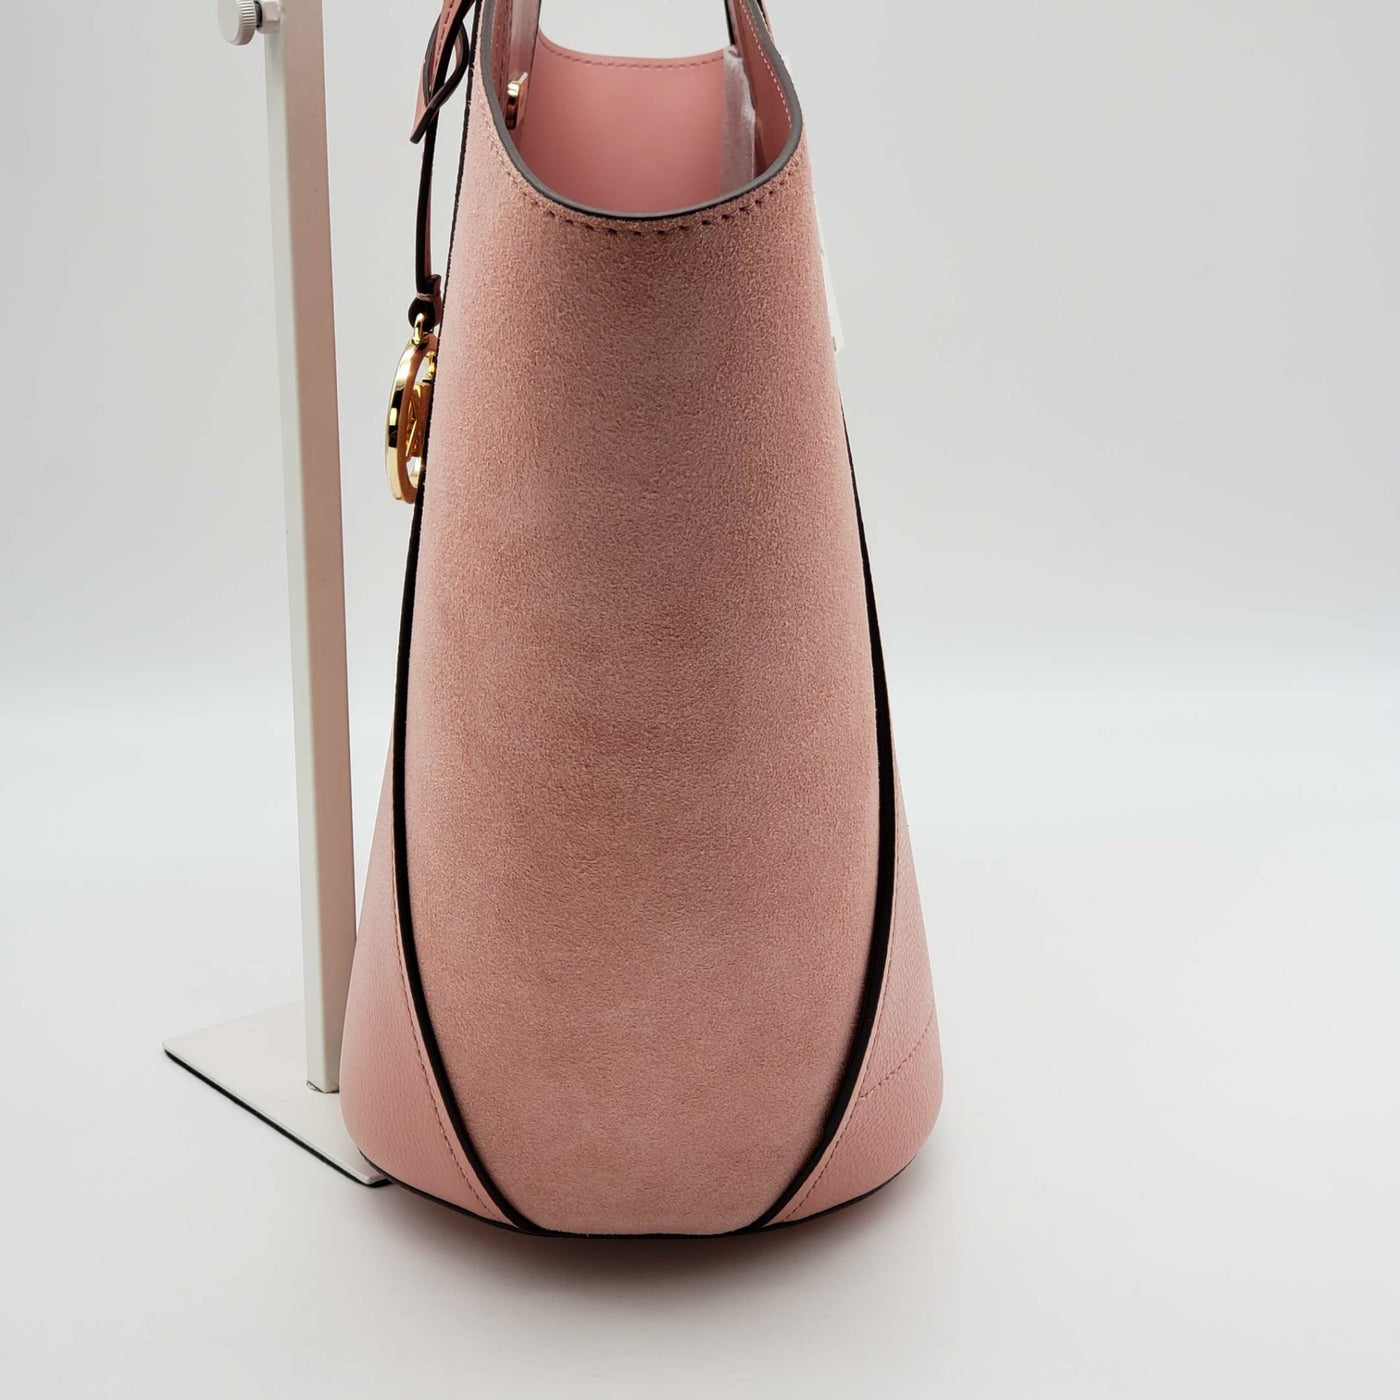 Michael Kors Portia Sunset Rose Large Tote Bag - Luxury Cheaper